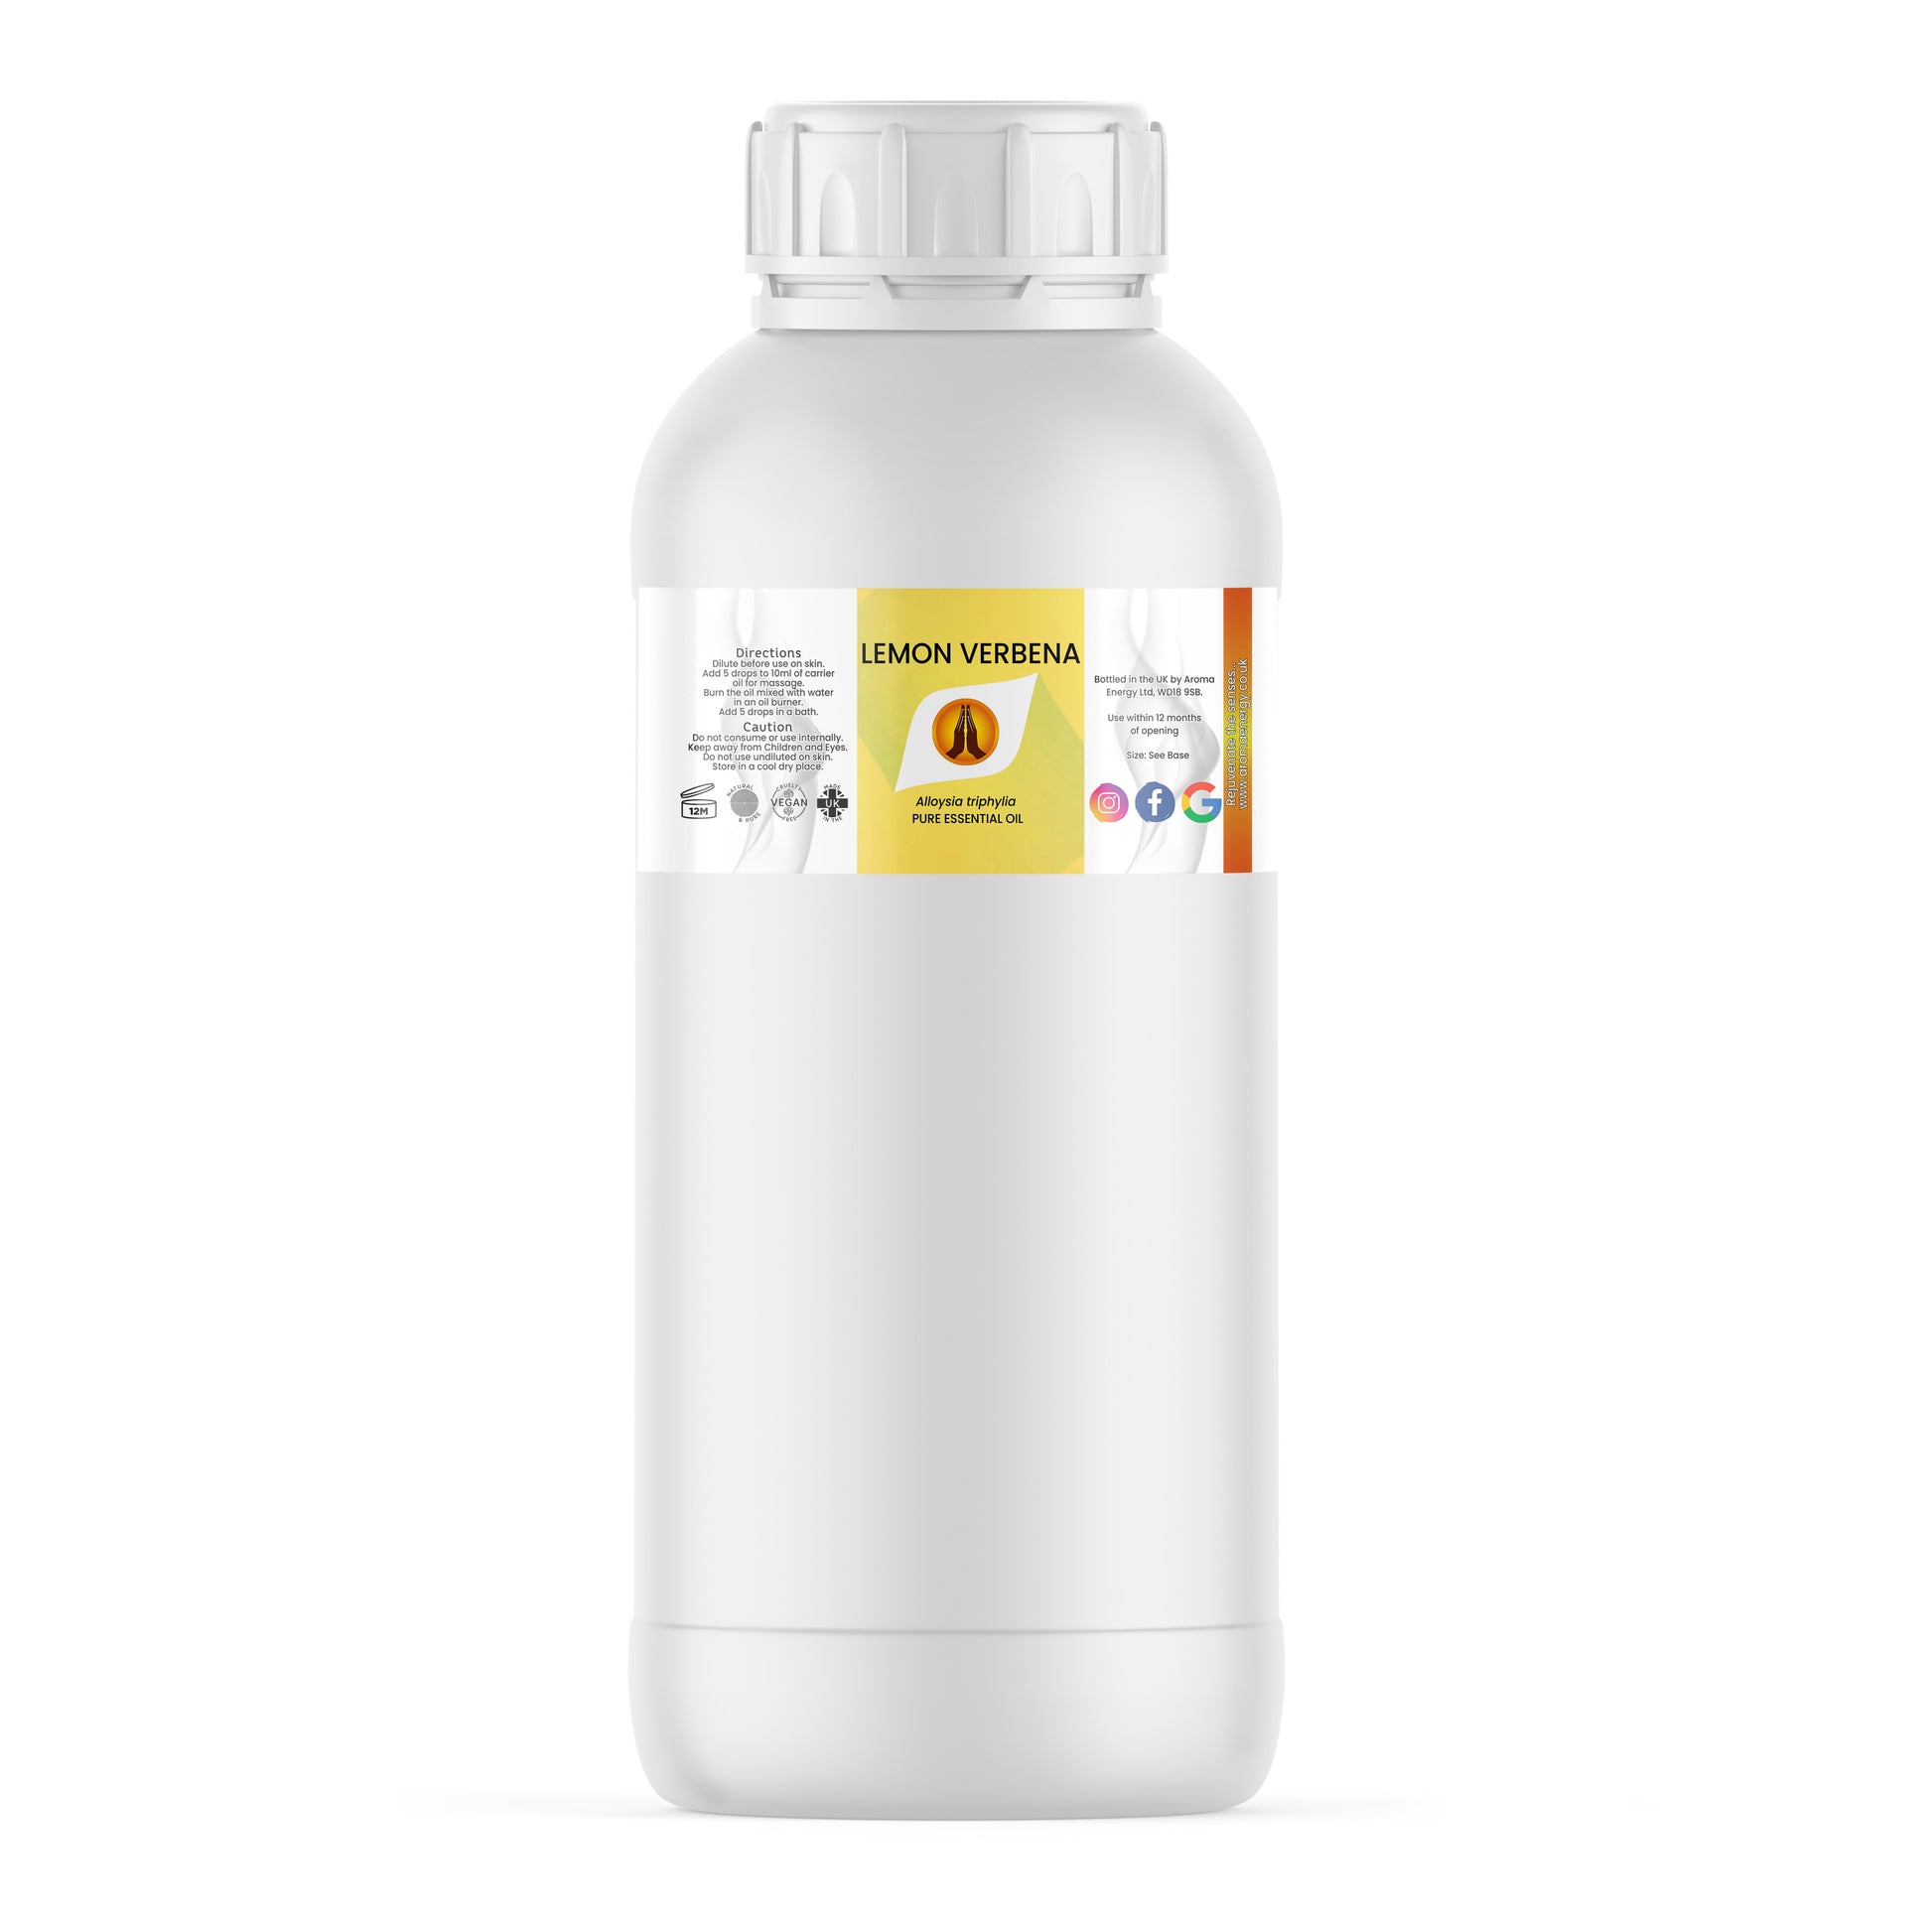 Lemon Verbena Pure Essential Oil - Aroma Energy